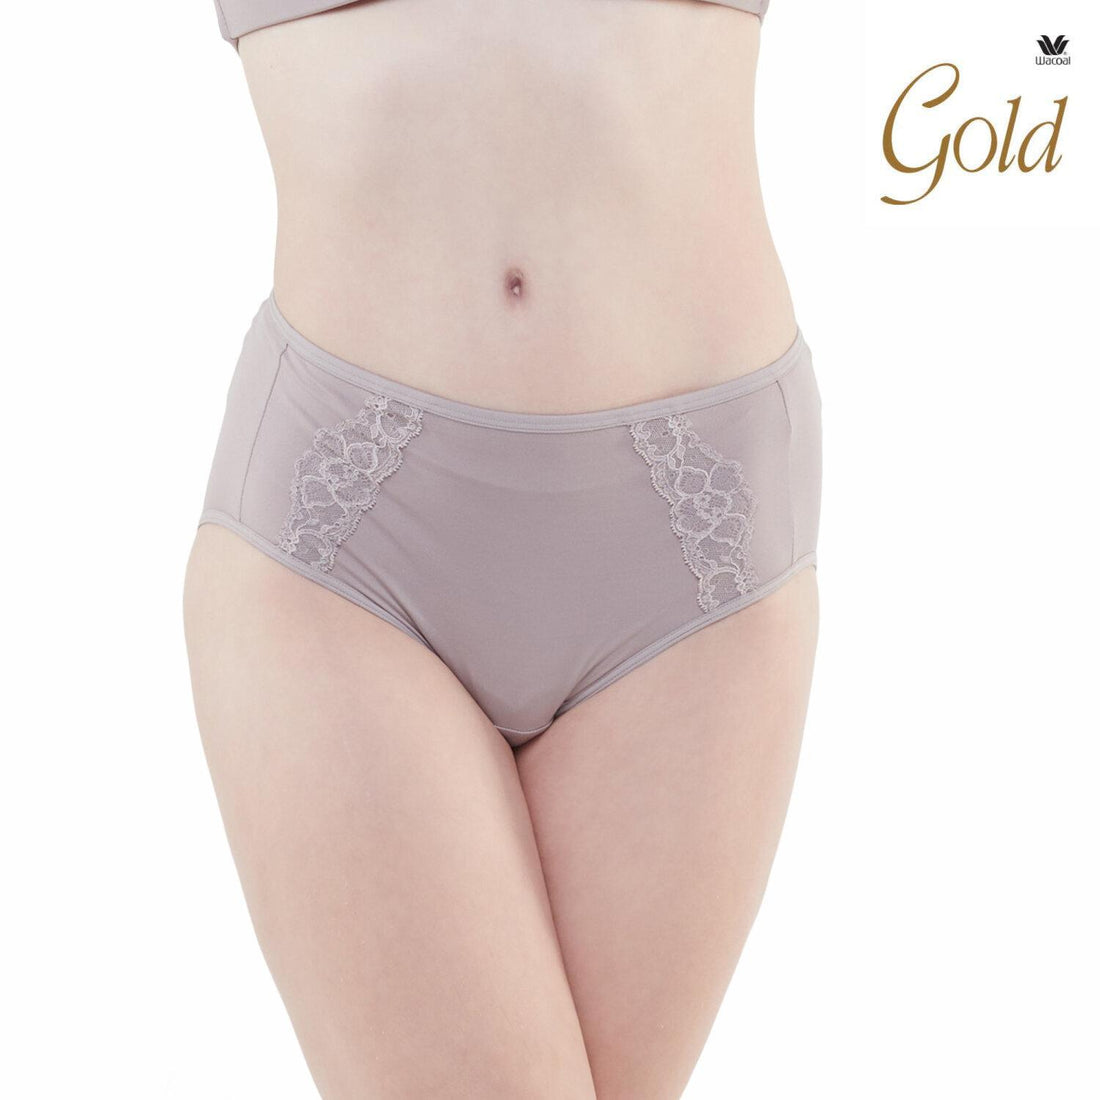 Wacoal Gold Panty Underwear Model W6O541 Gray (GY)